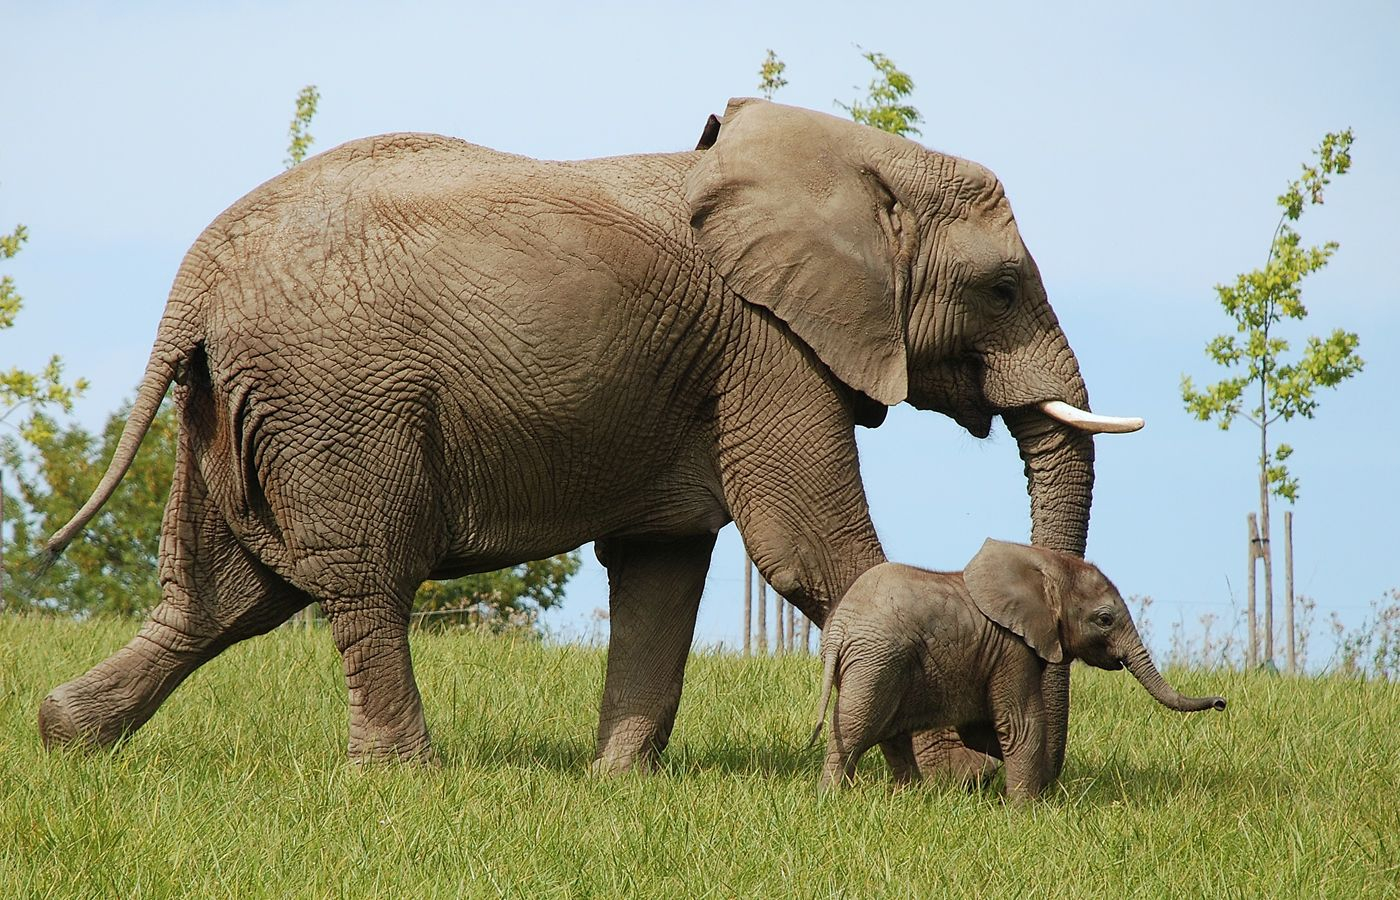 First African elephant calf in the Czech Republic